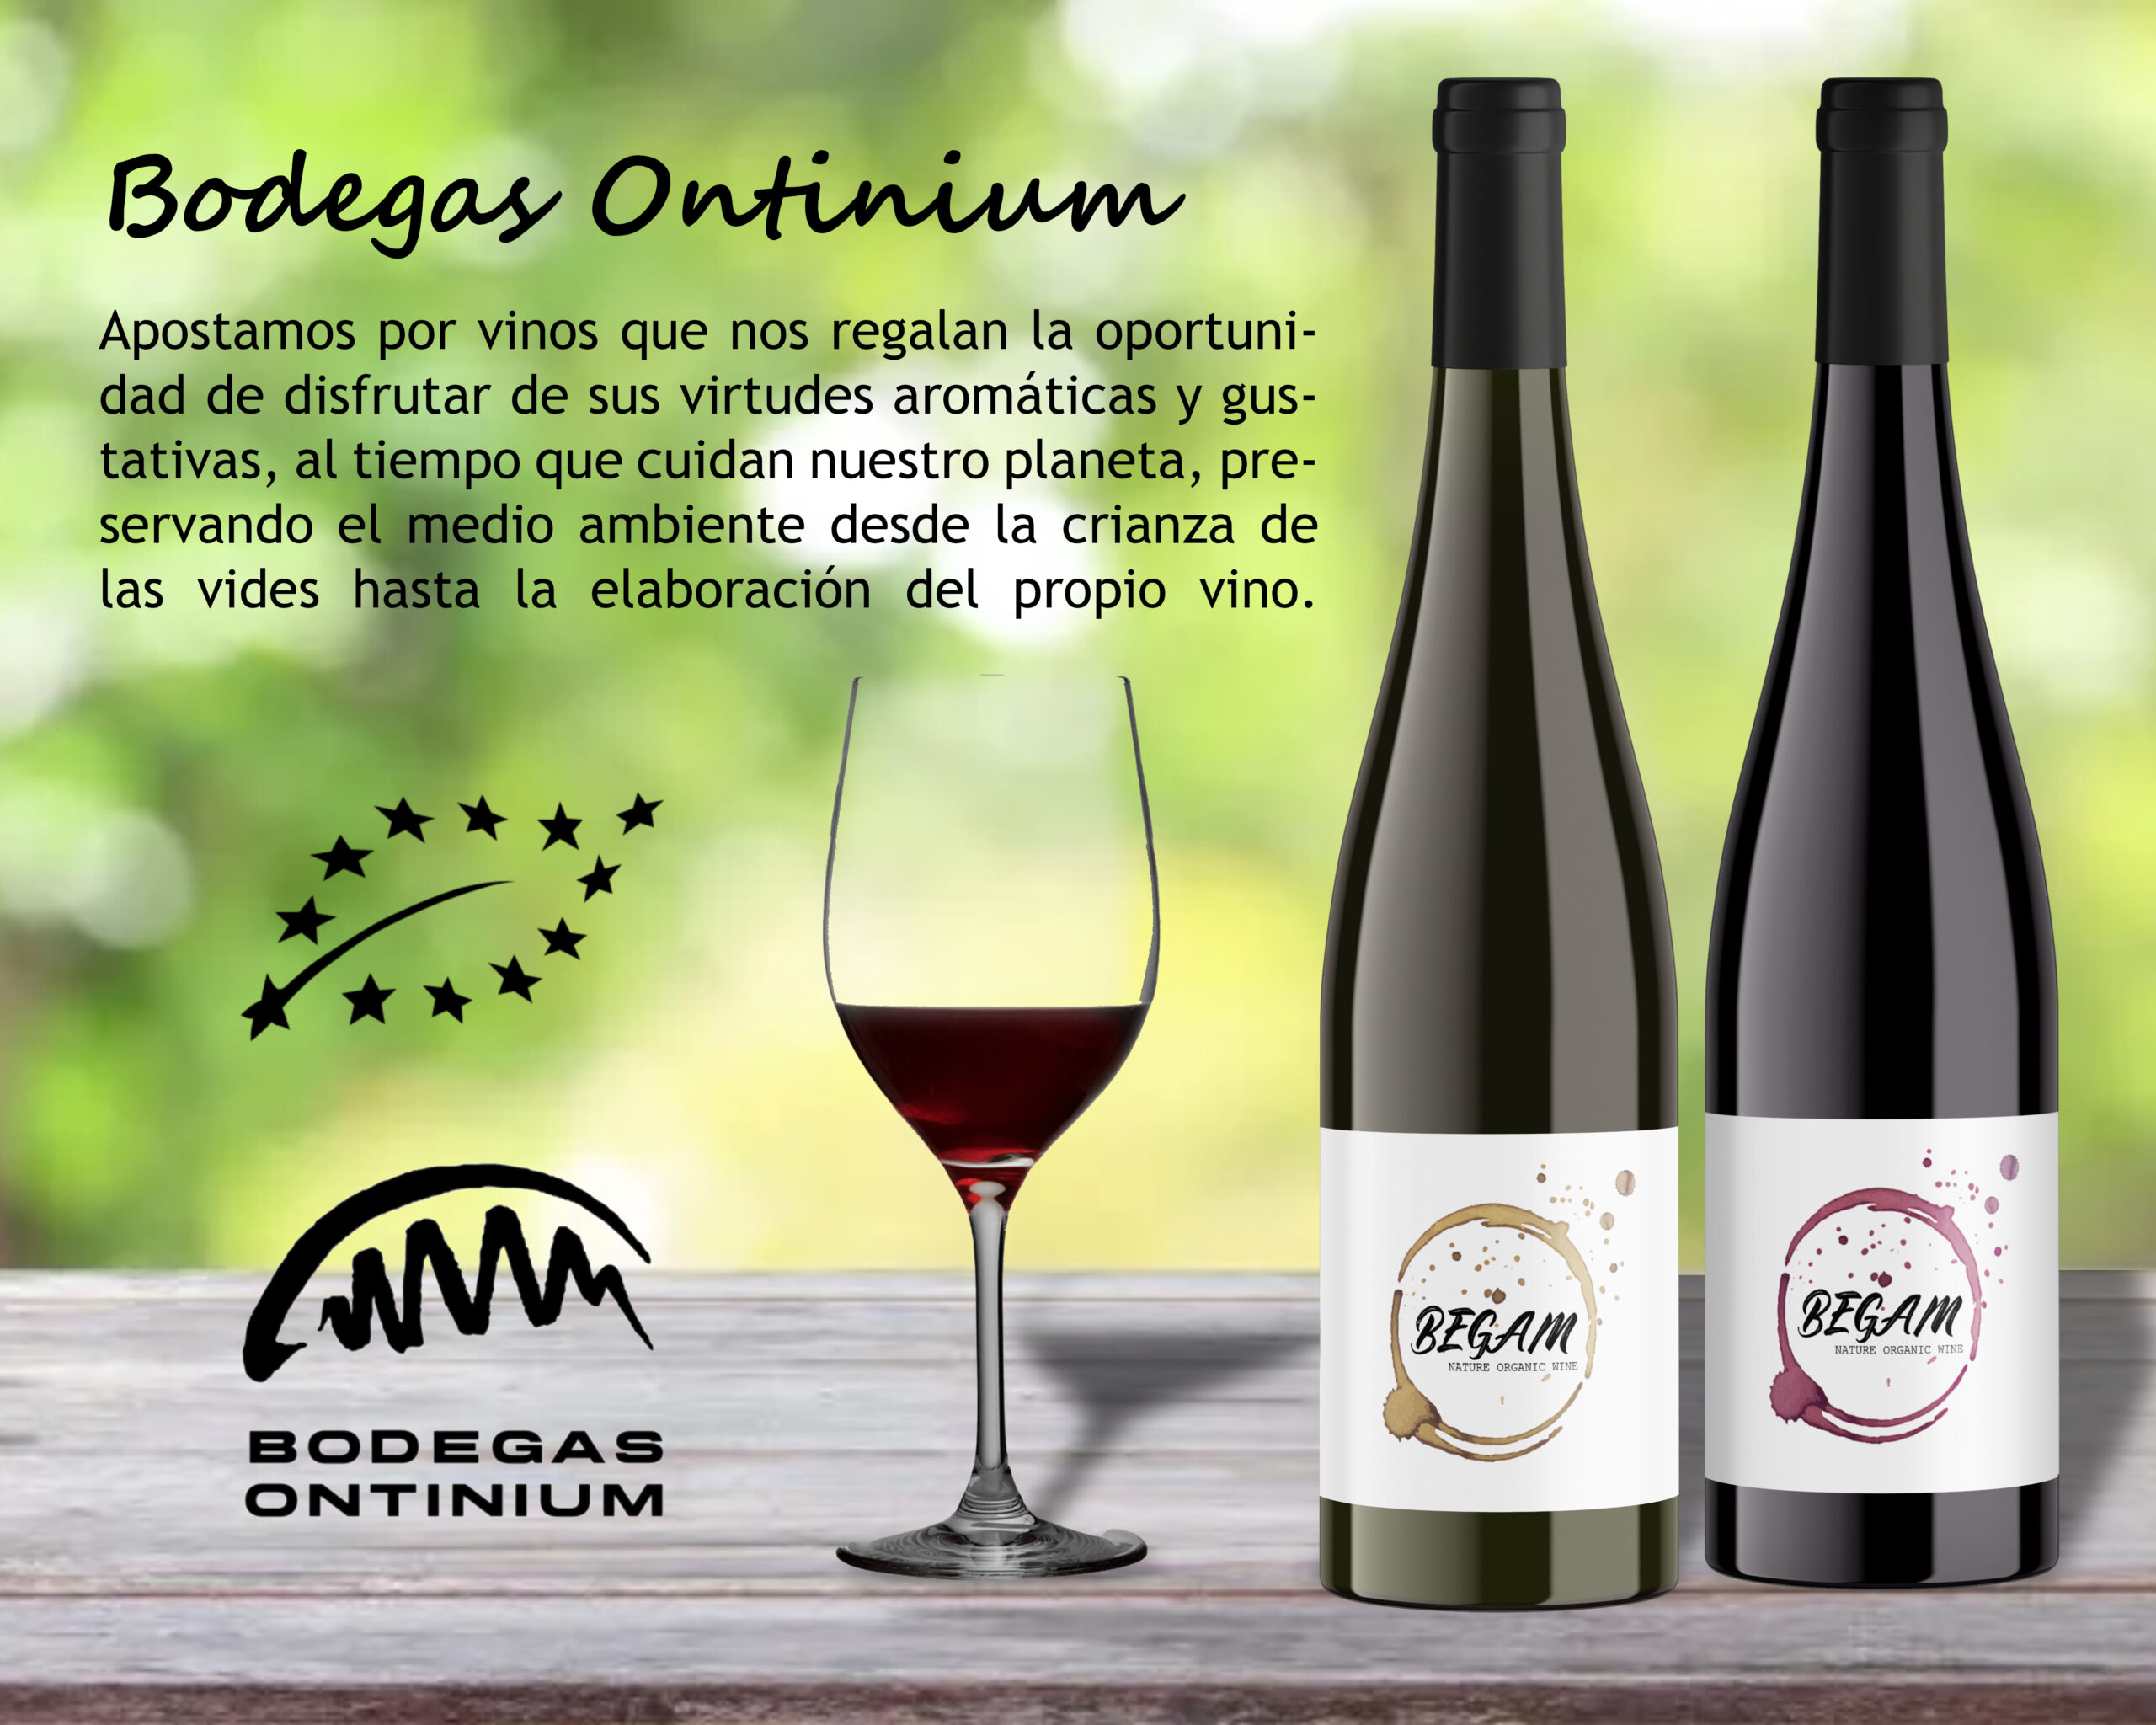 Bodegas Ontinium estrena su nuevo vino ecológico “Begam”.